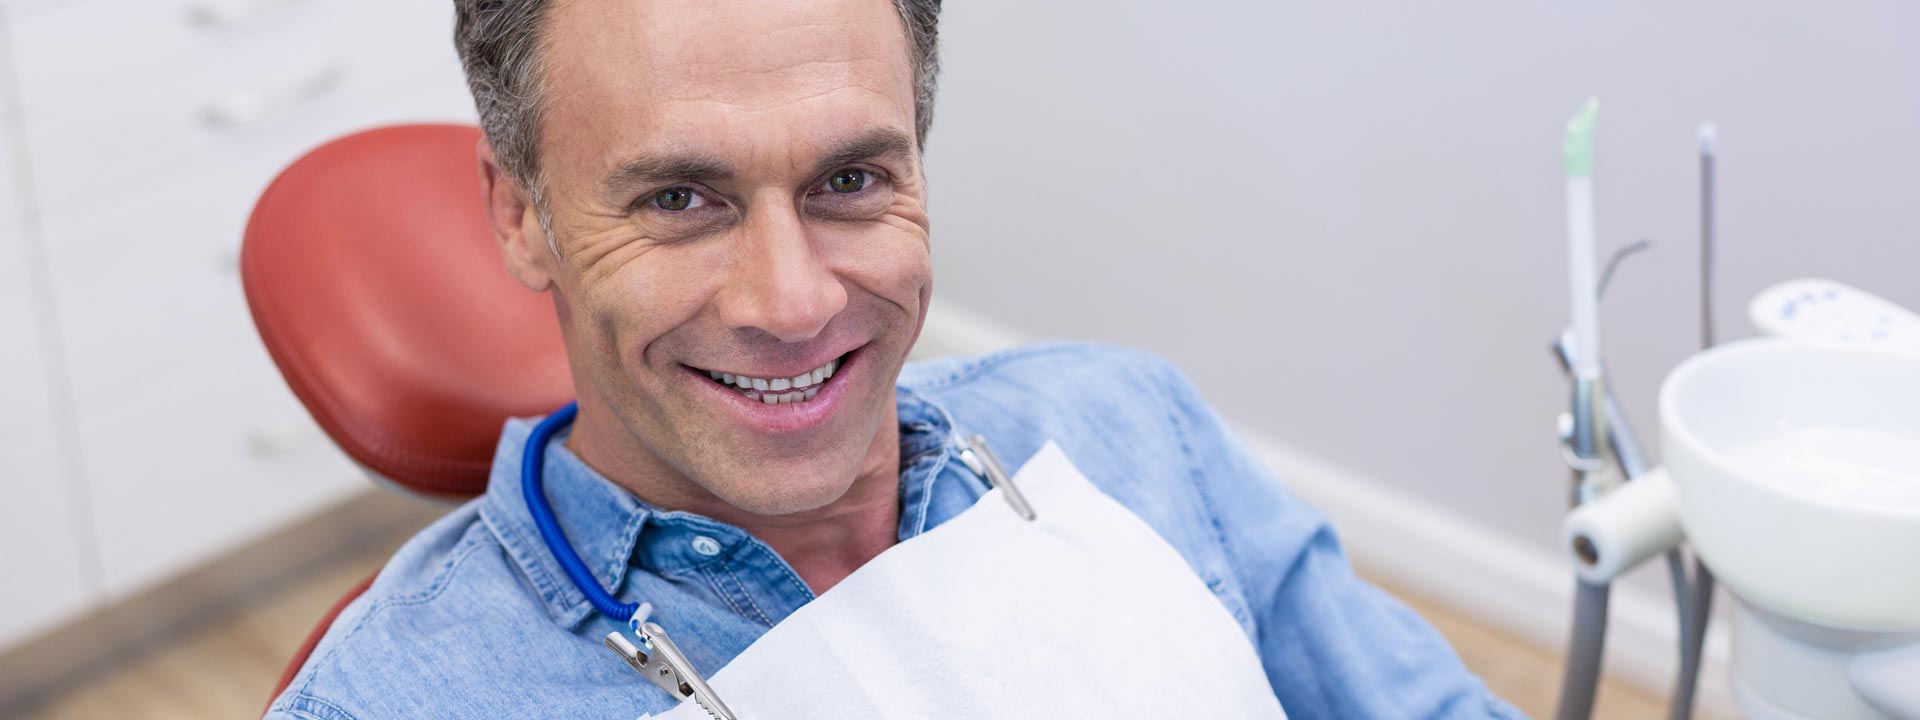 Man ready for dental implant treatment